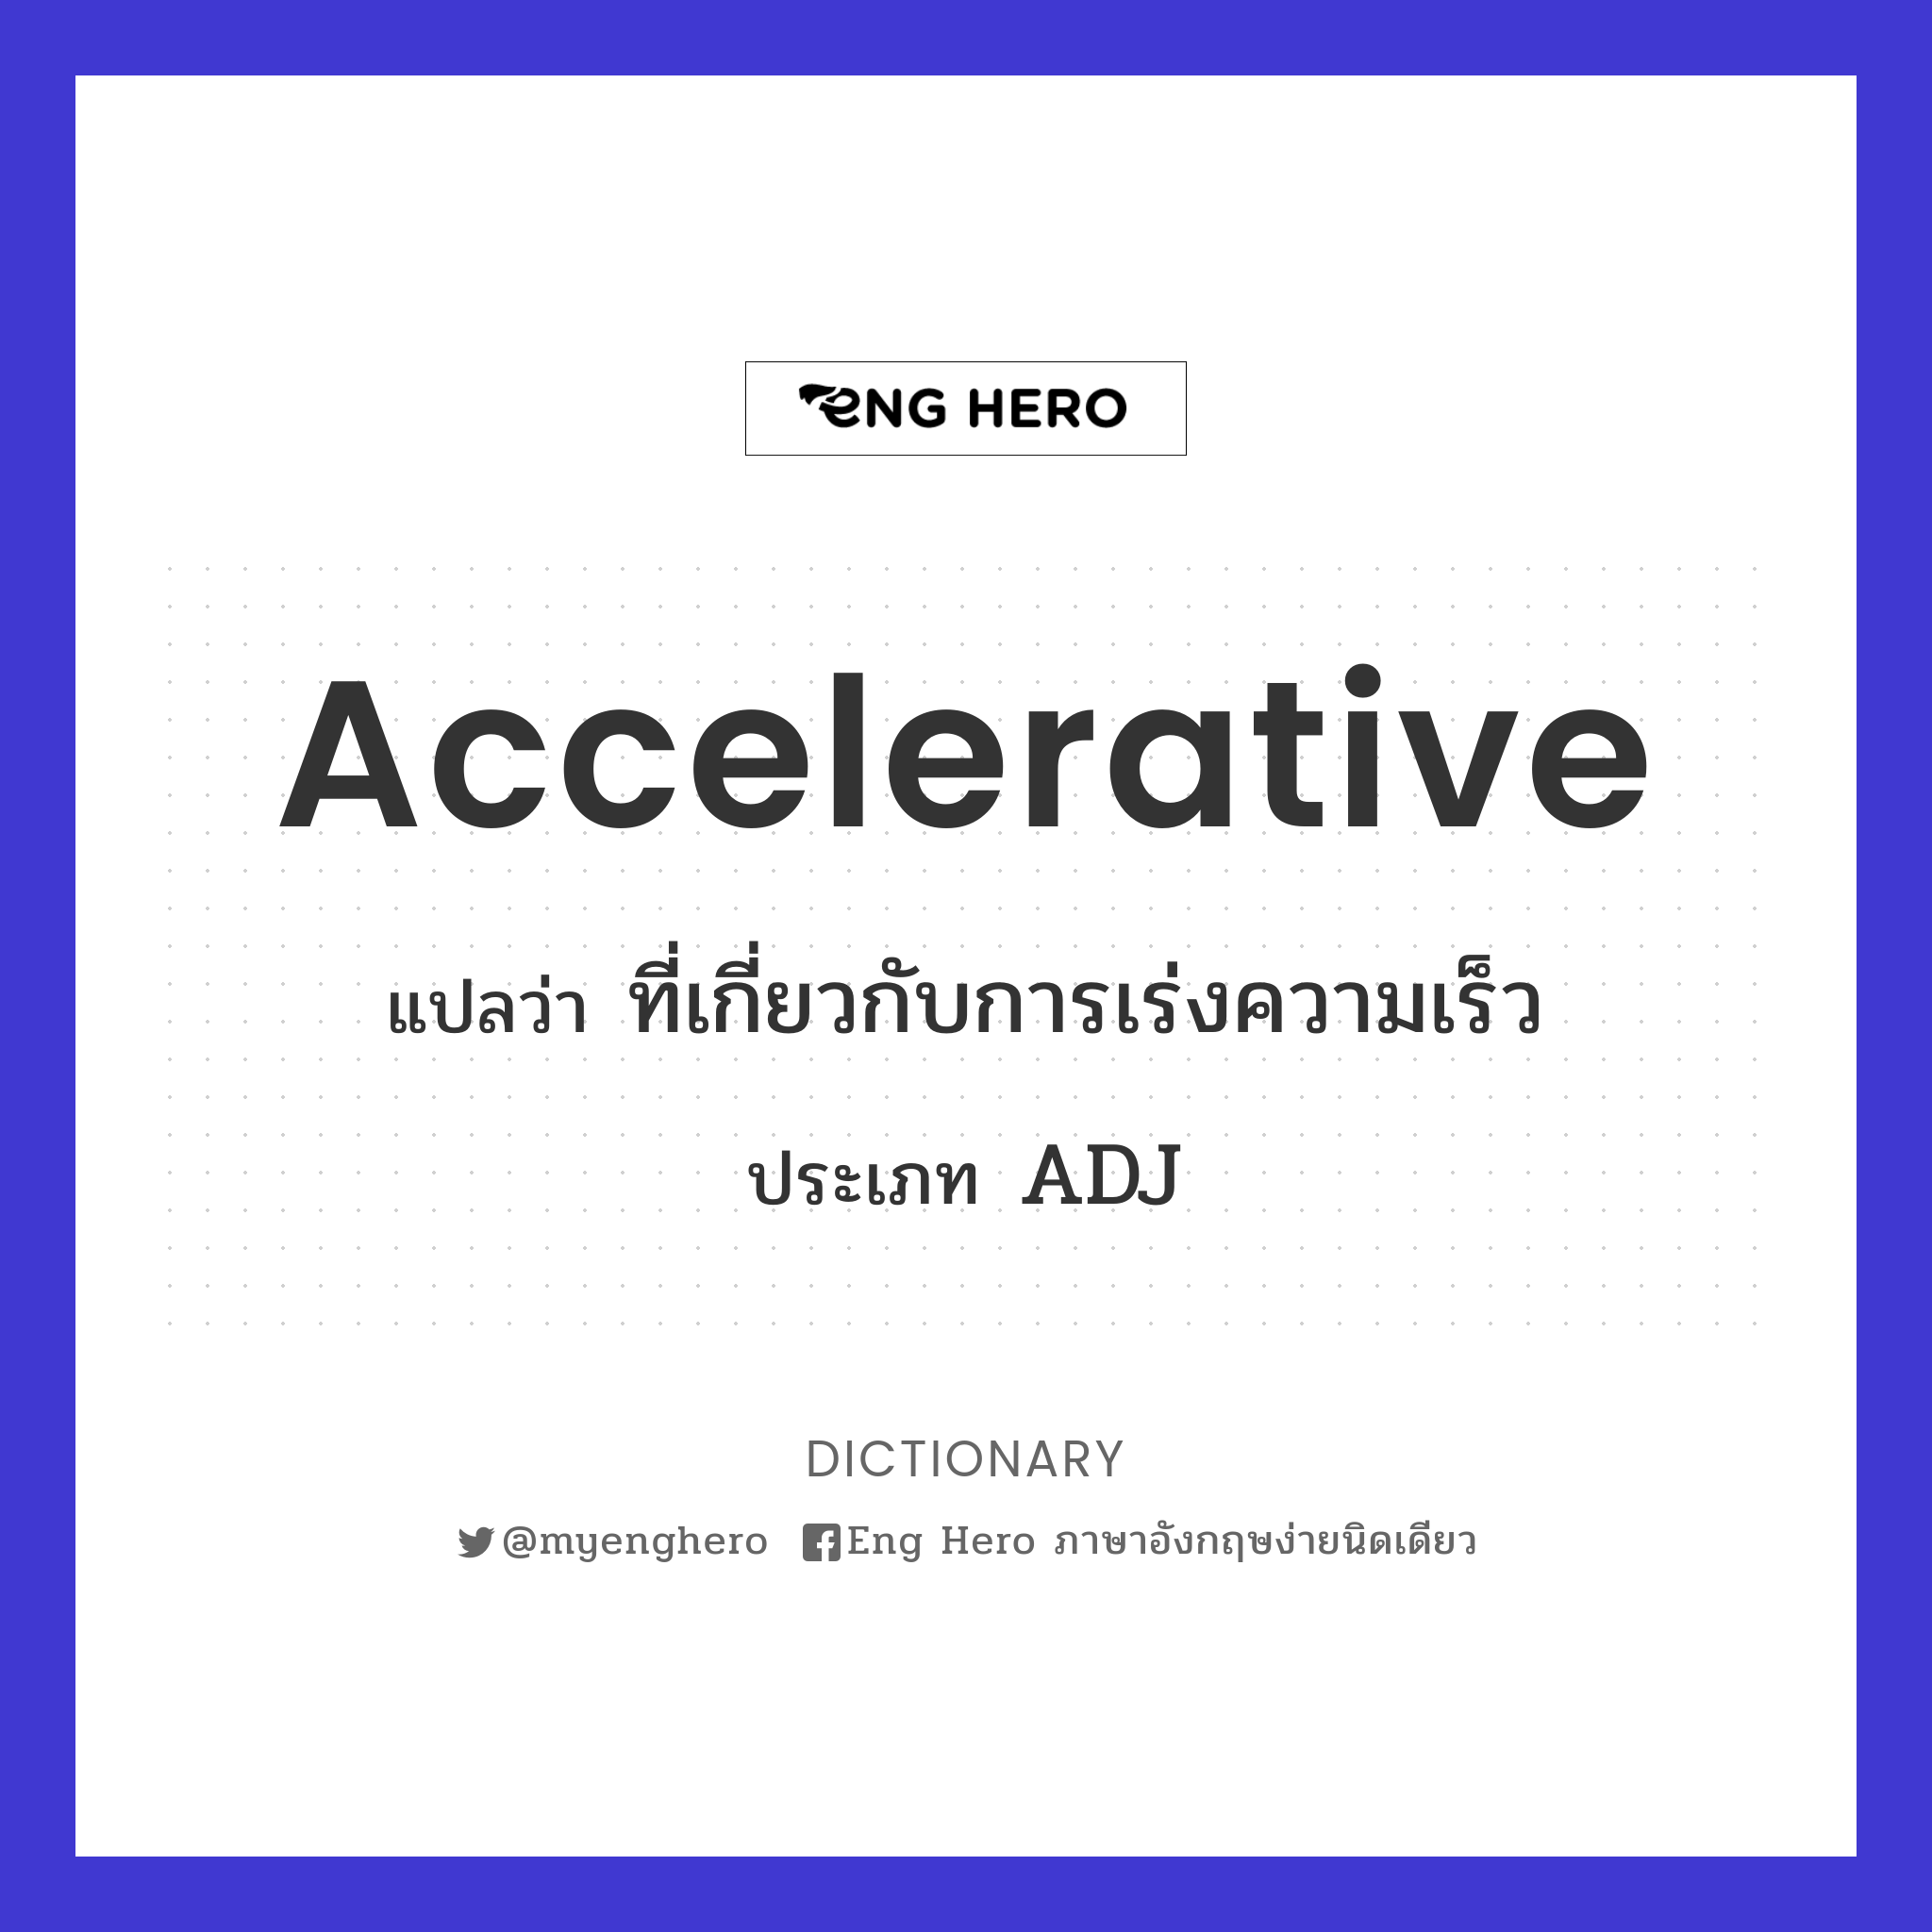 accelerative